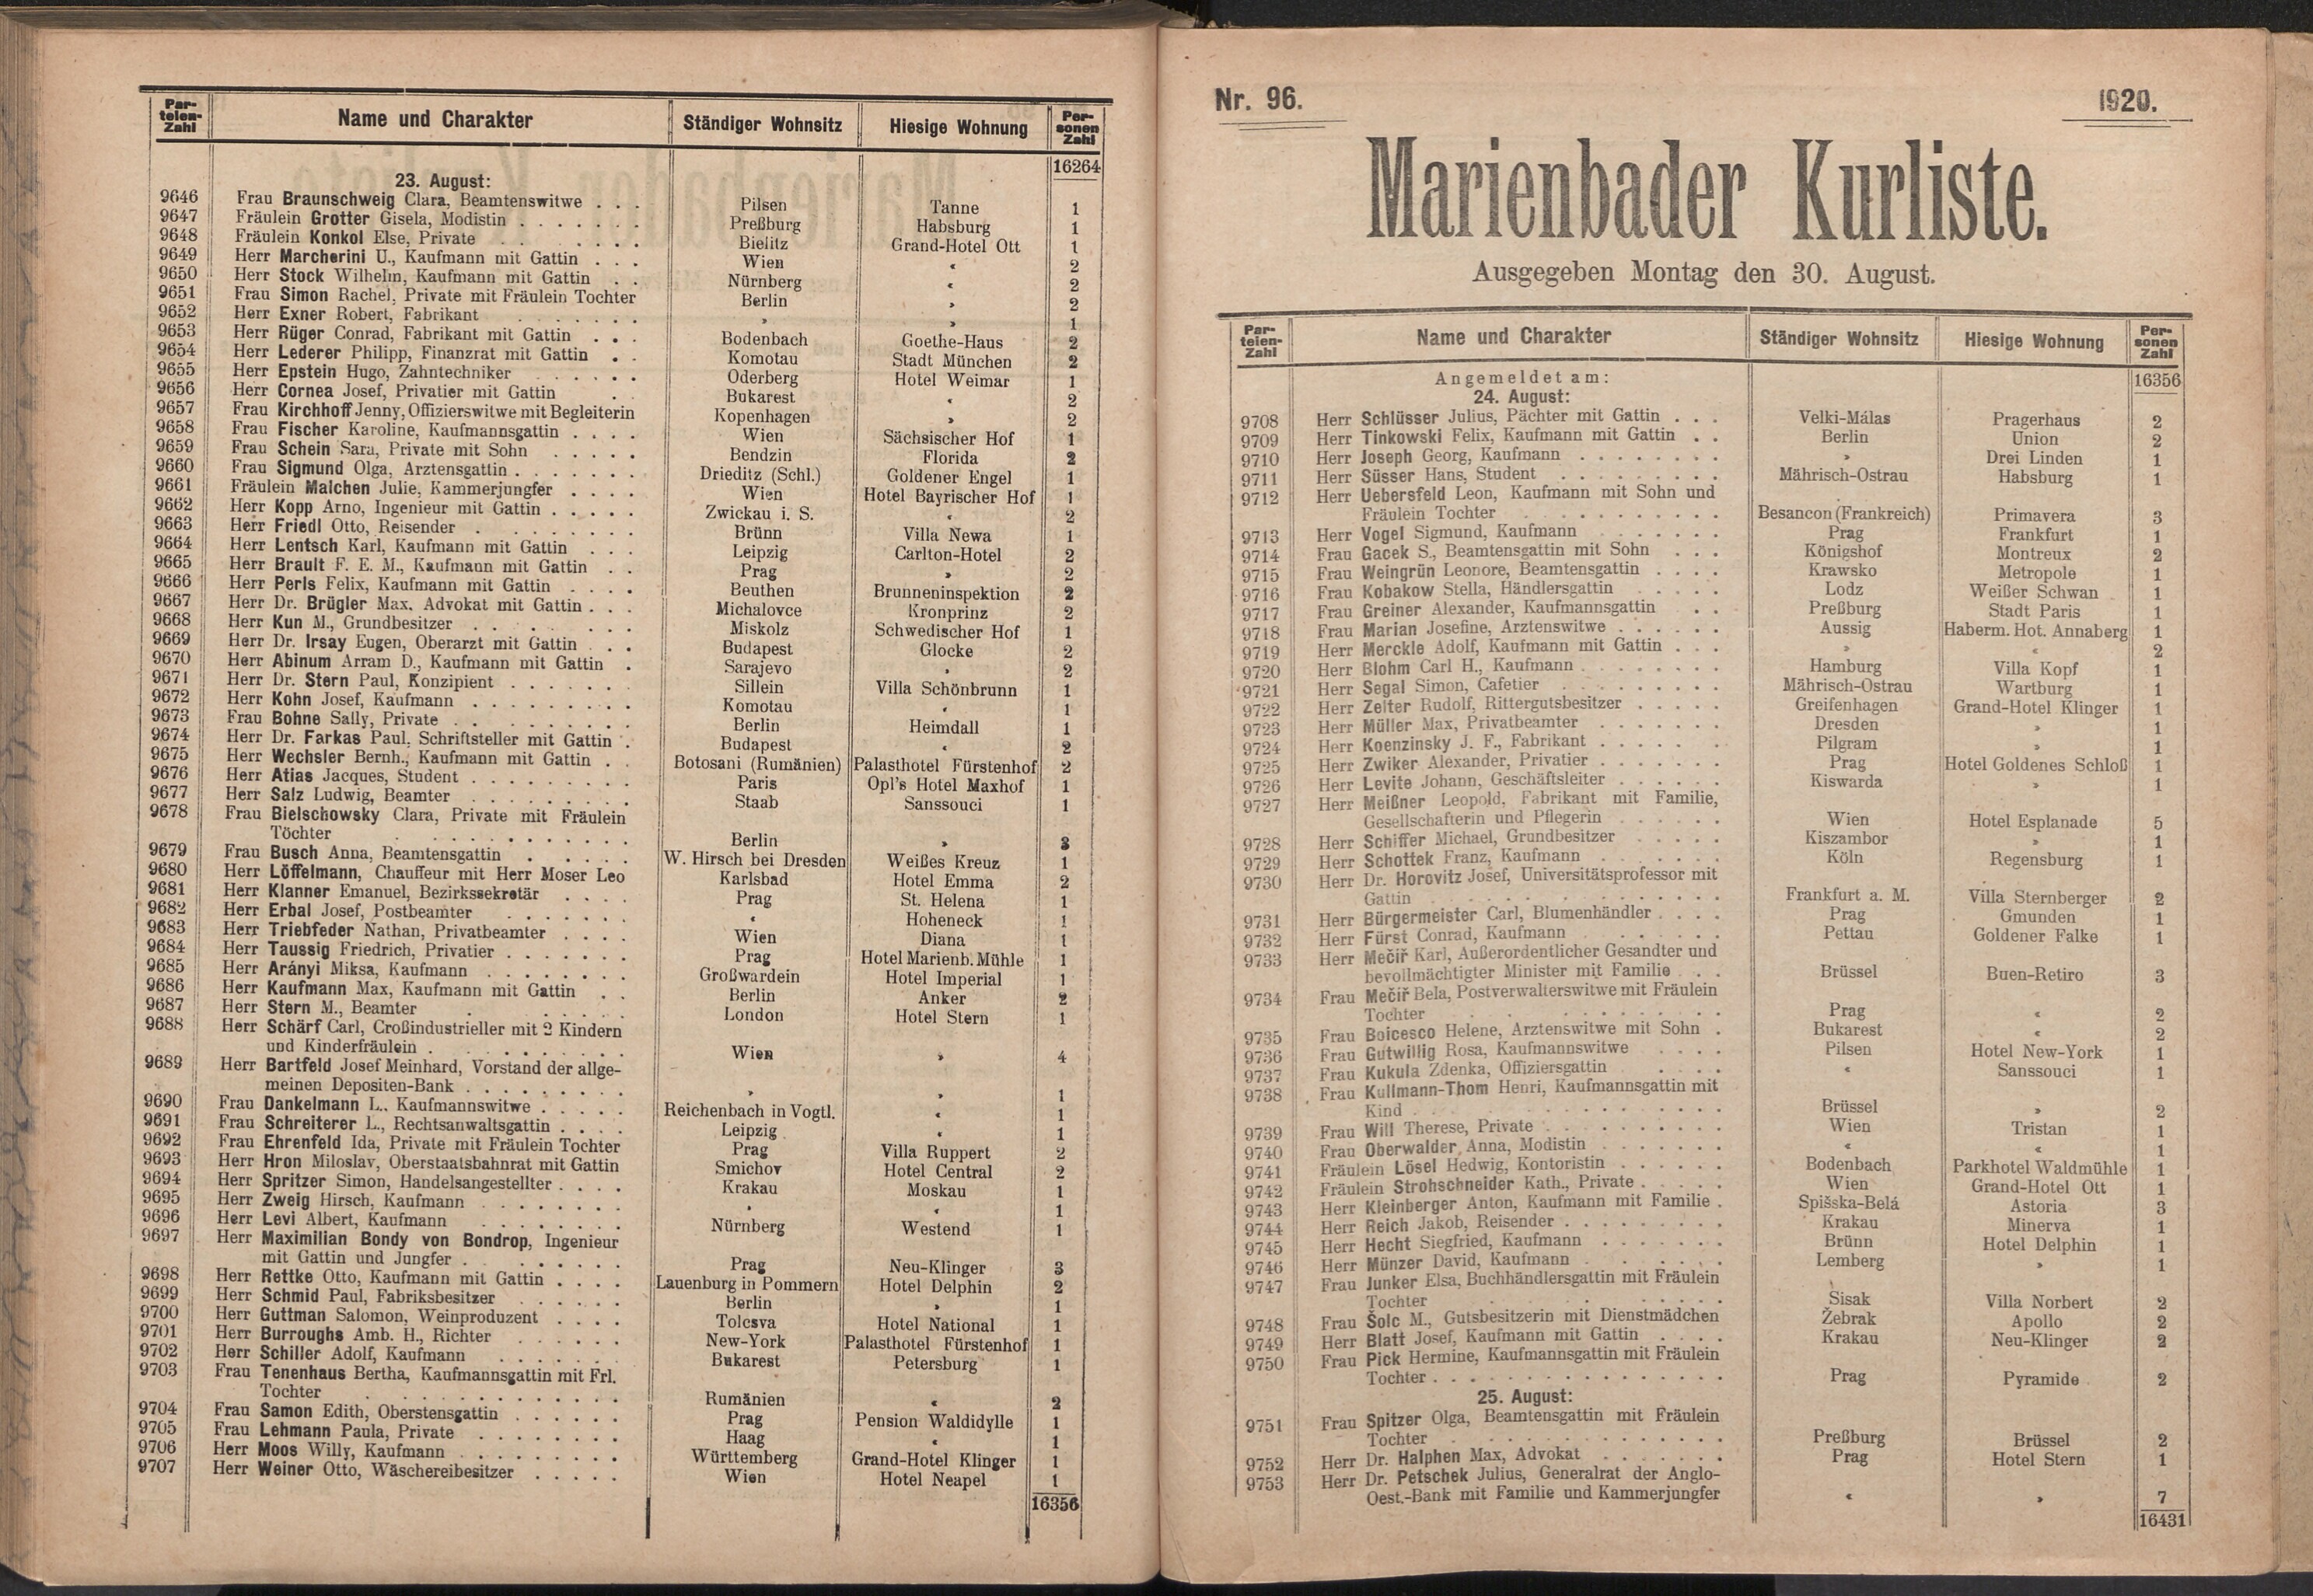 135. soap-ch_knihovna_marienbader-kurliste-1920_1350